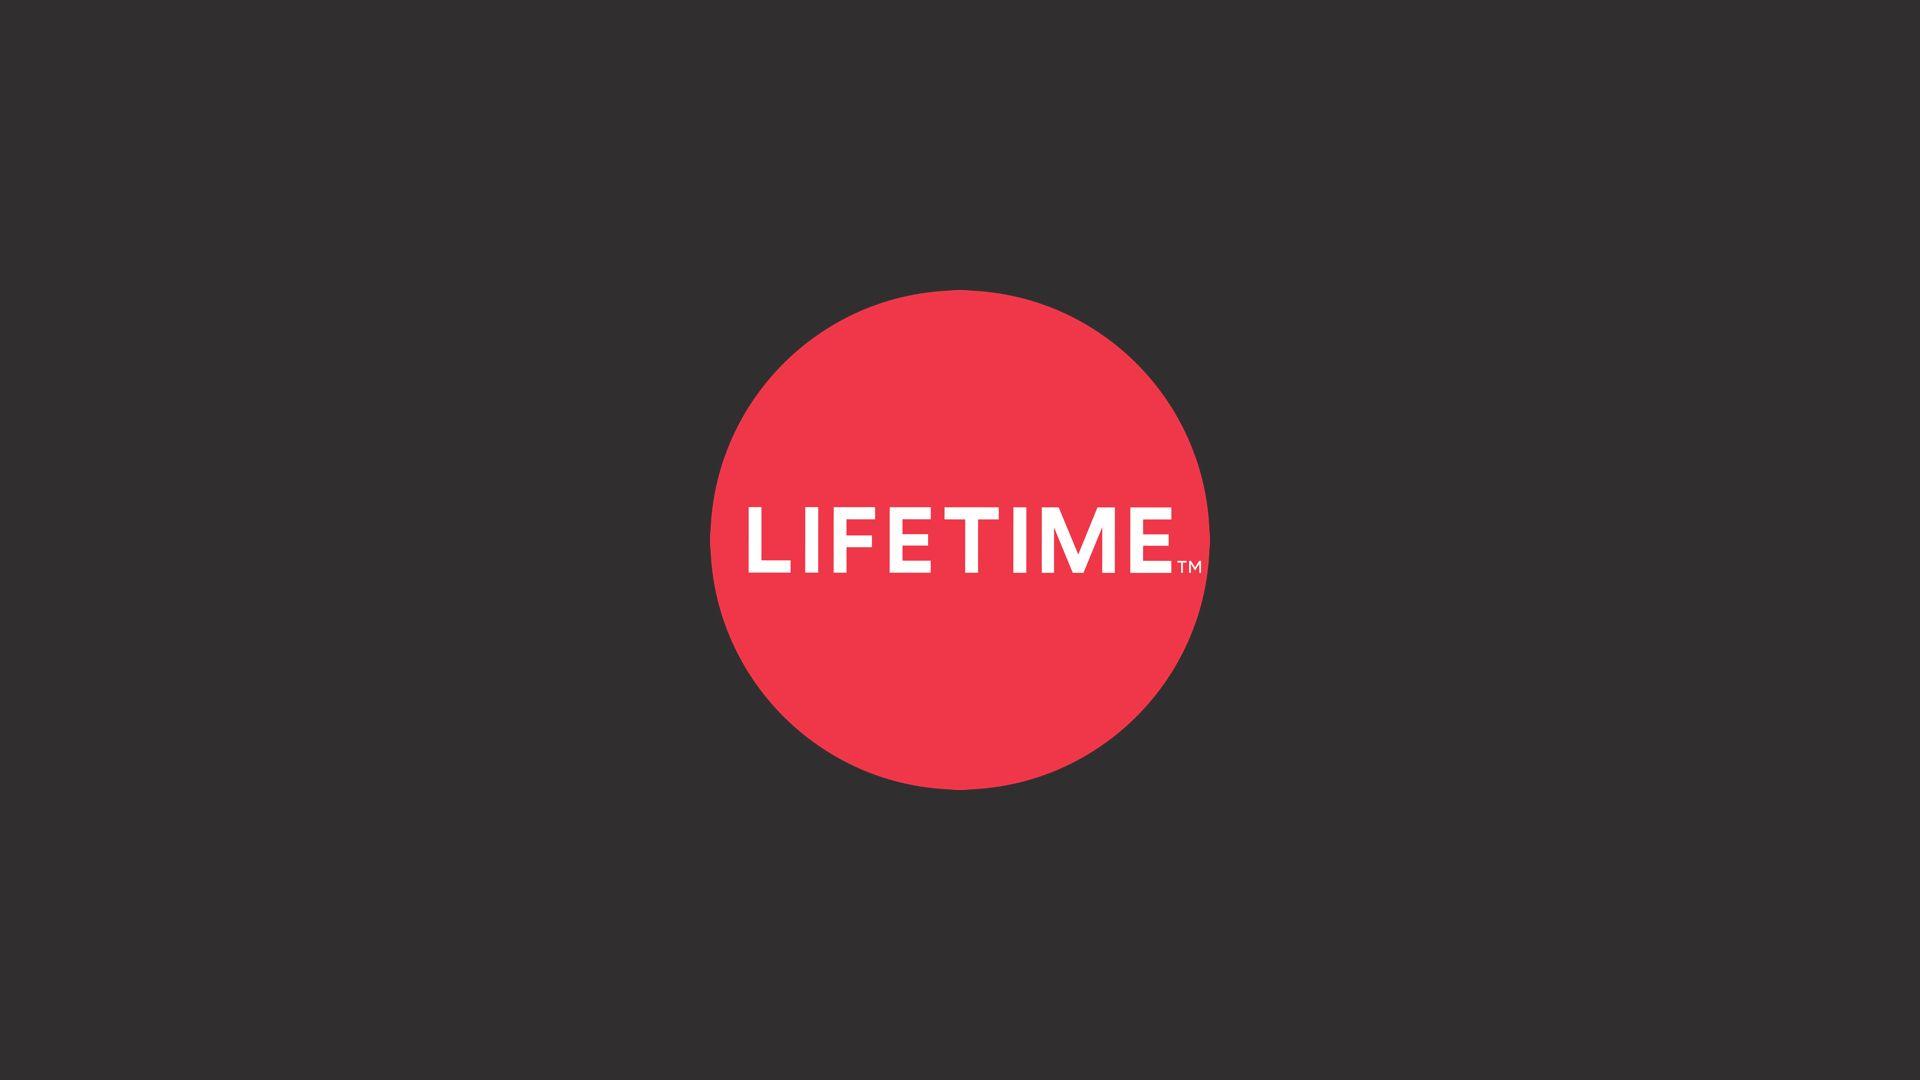 We TV Network Logo - Lifetime Movies: Watch Your Favorite Shows & Original Movies